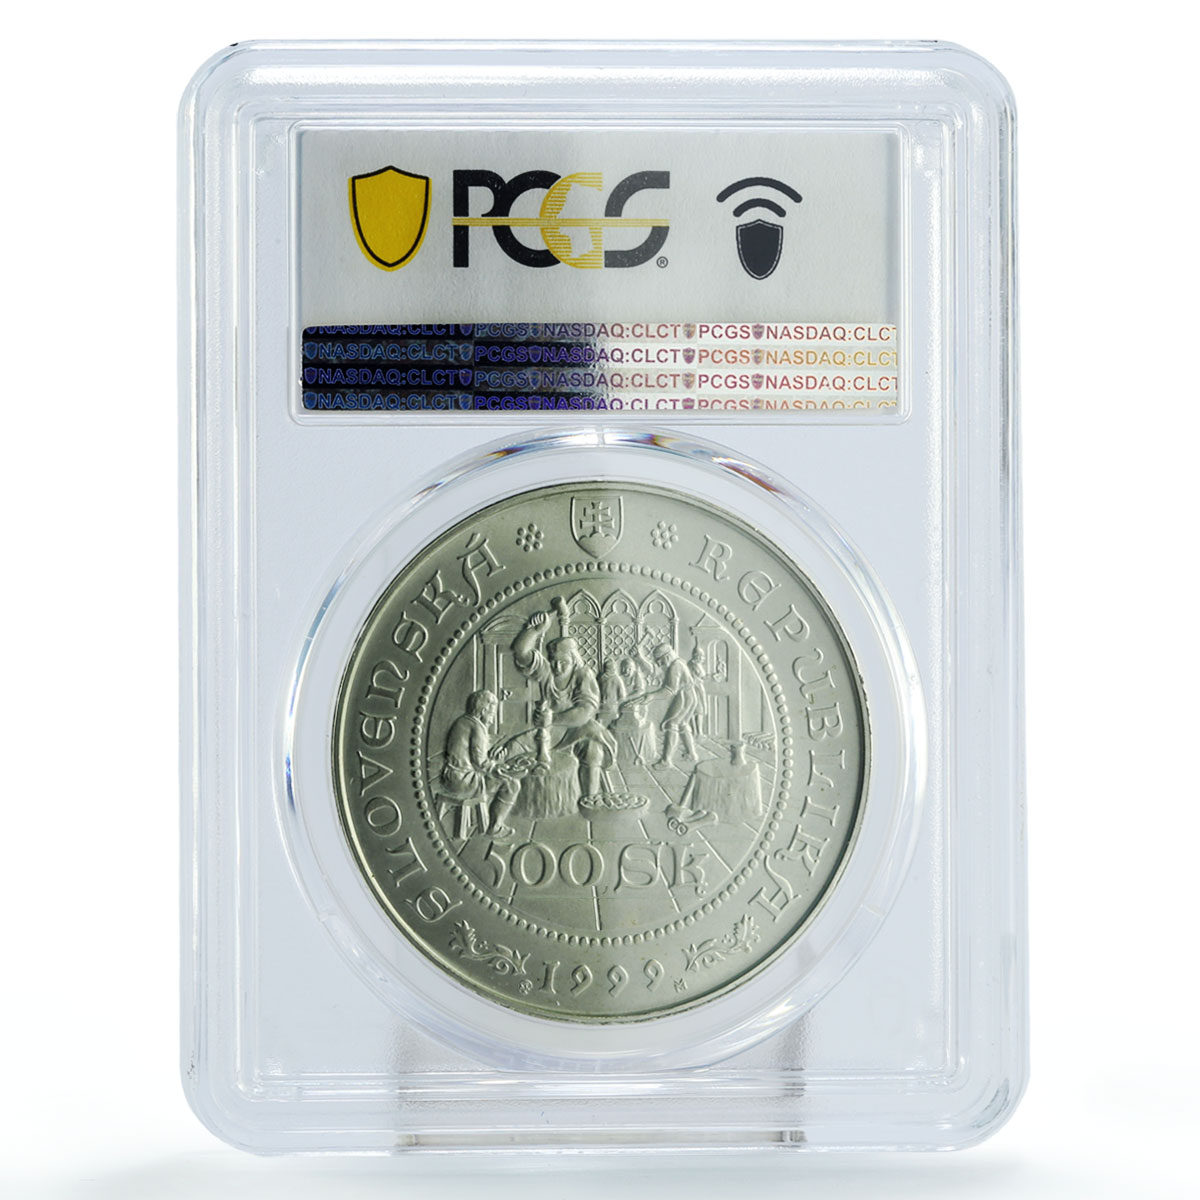 Slovakia 500 korun Kremnica First Thaller Craftsmans MS69 PCGS silver coin 1999